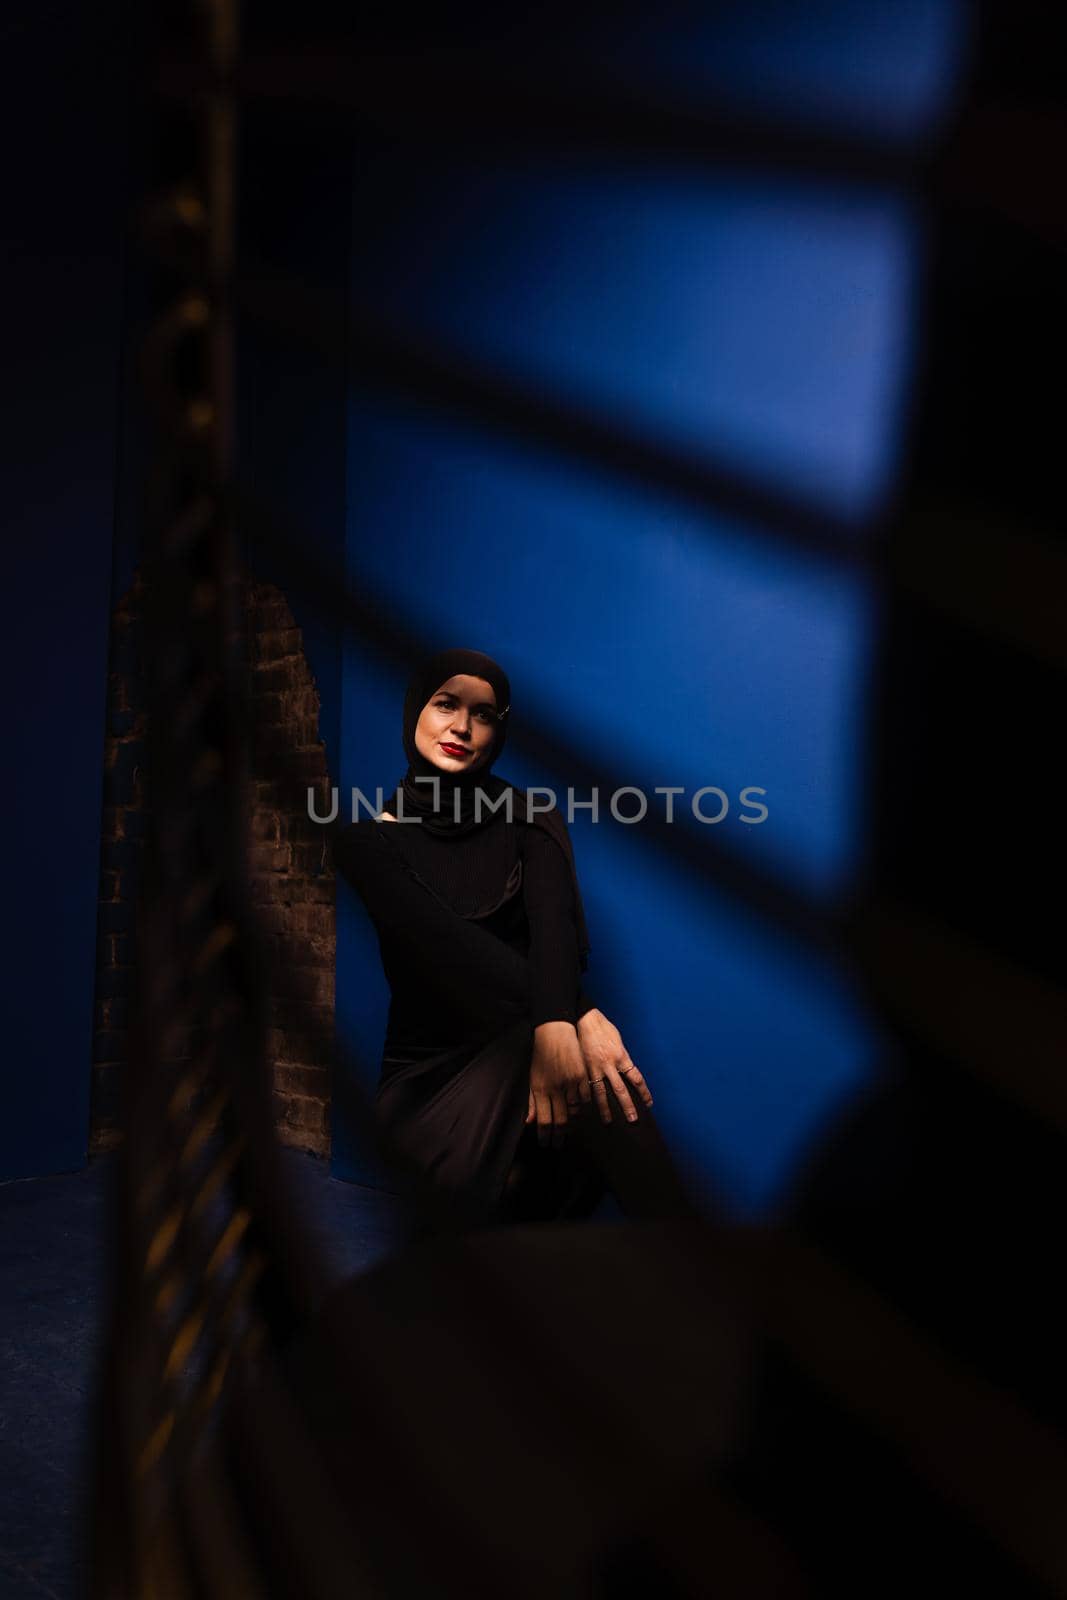 Fashion muslim model in black hijab is posing on blue background in studio. Islam religion creative photo by Rabizo